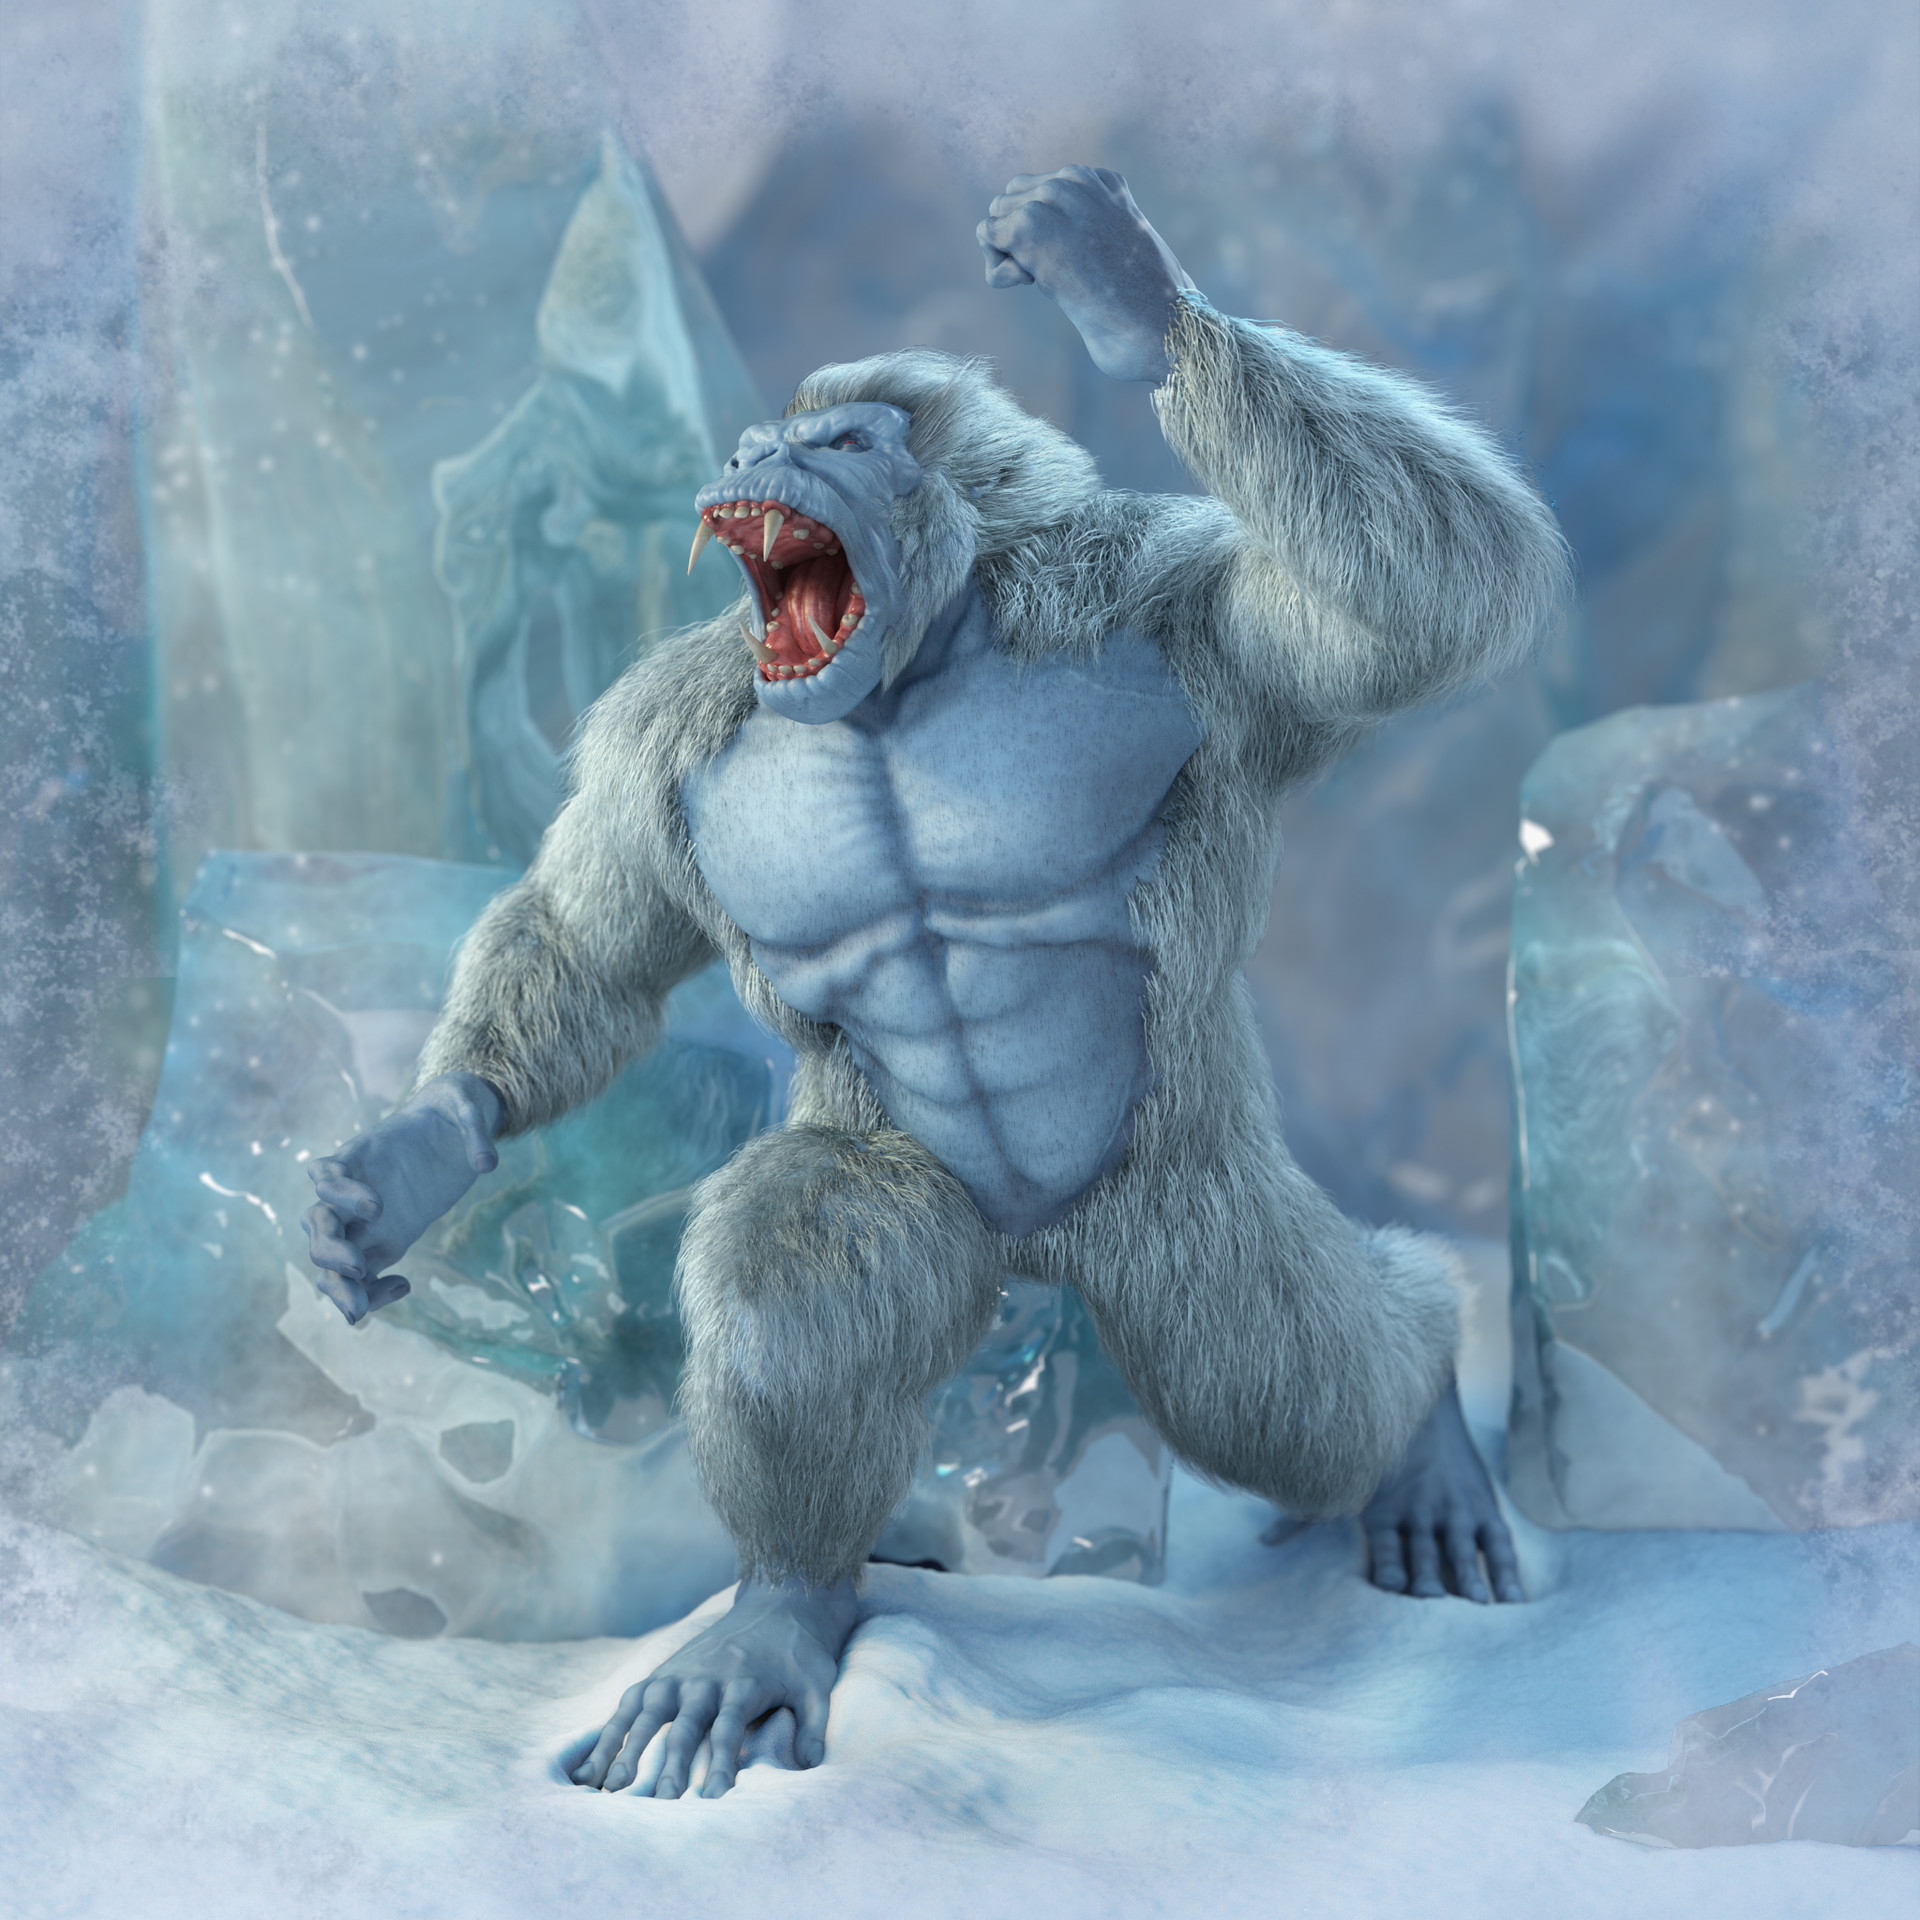 Blizzard primal rage